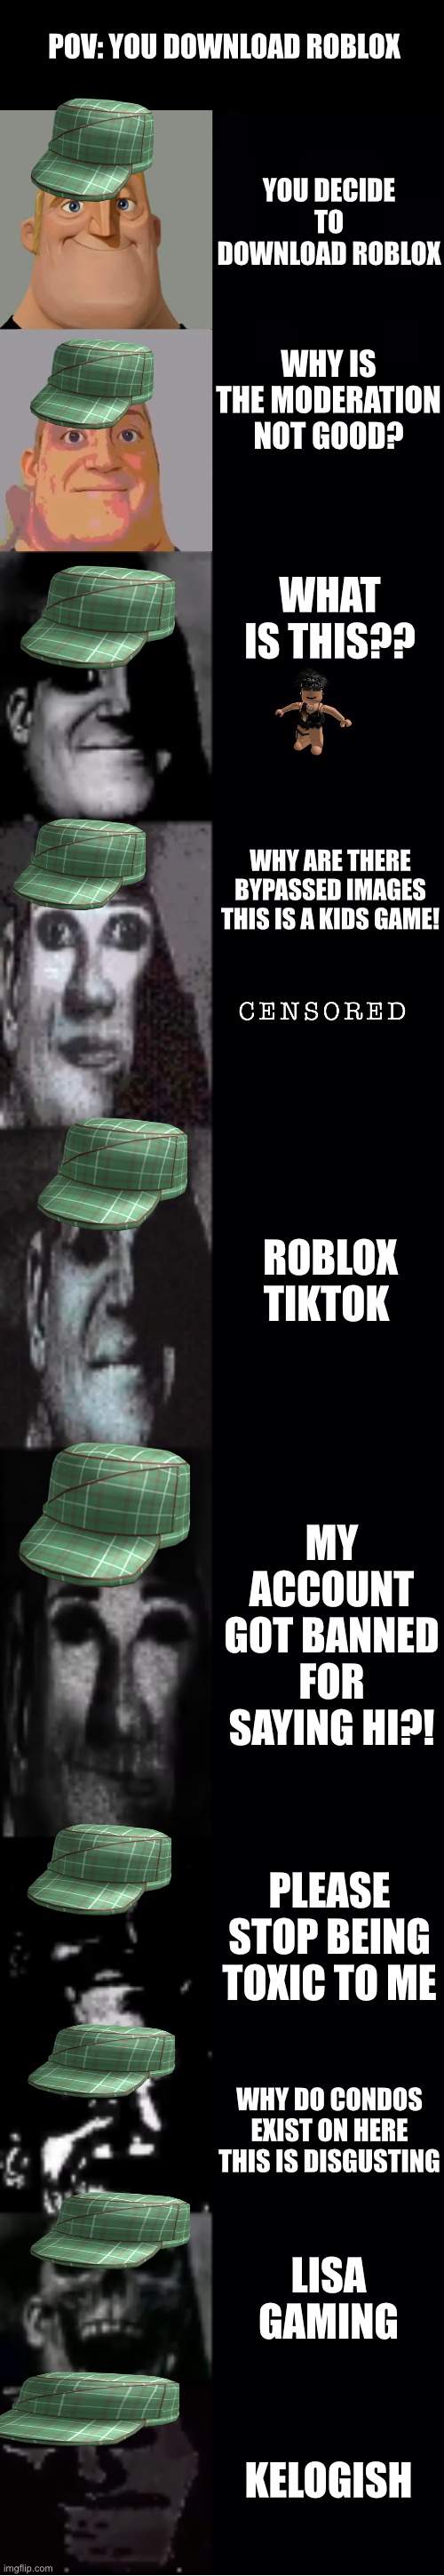 meme foto roblox｜Pesquisa do TikTok